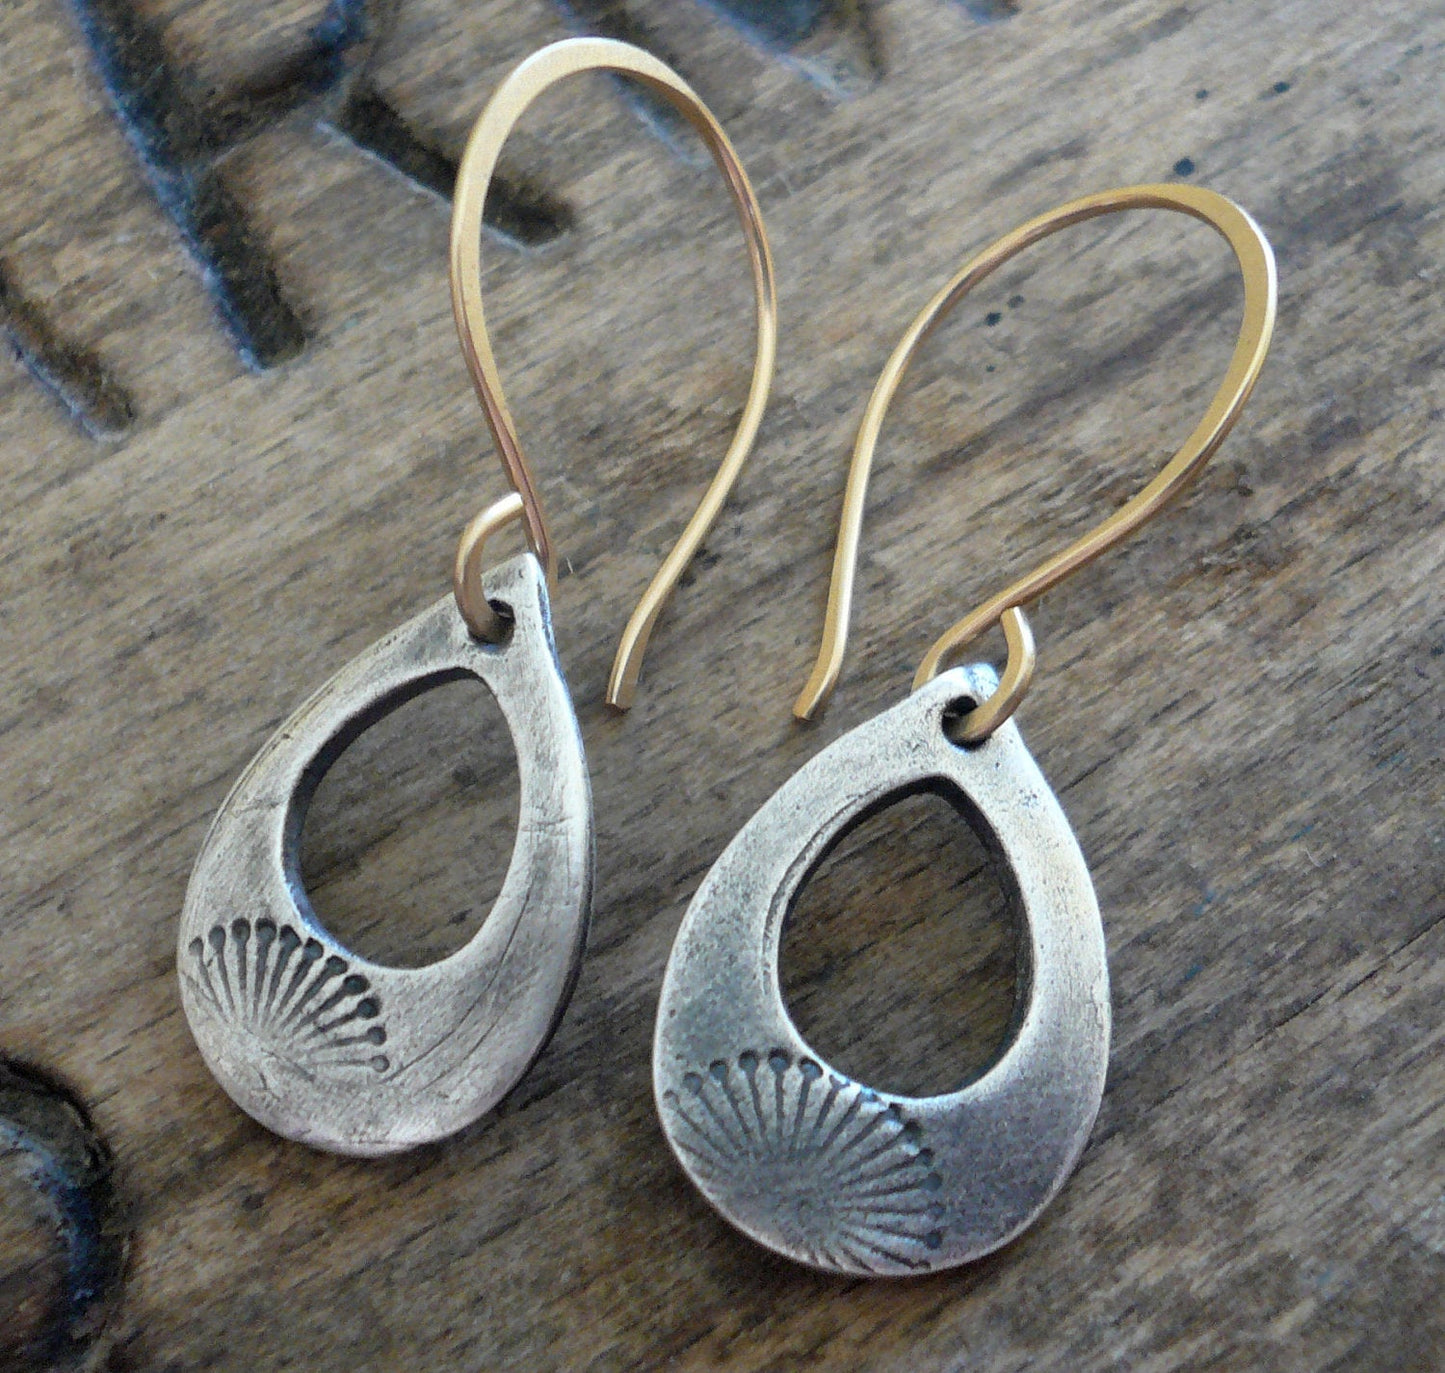 Daybreak Earrings - Handmade. Mixed Metal. 14kt Goldfill & Oxidized fine recycled silver